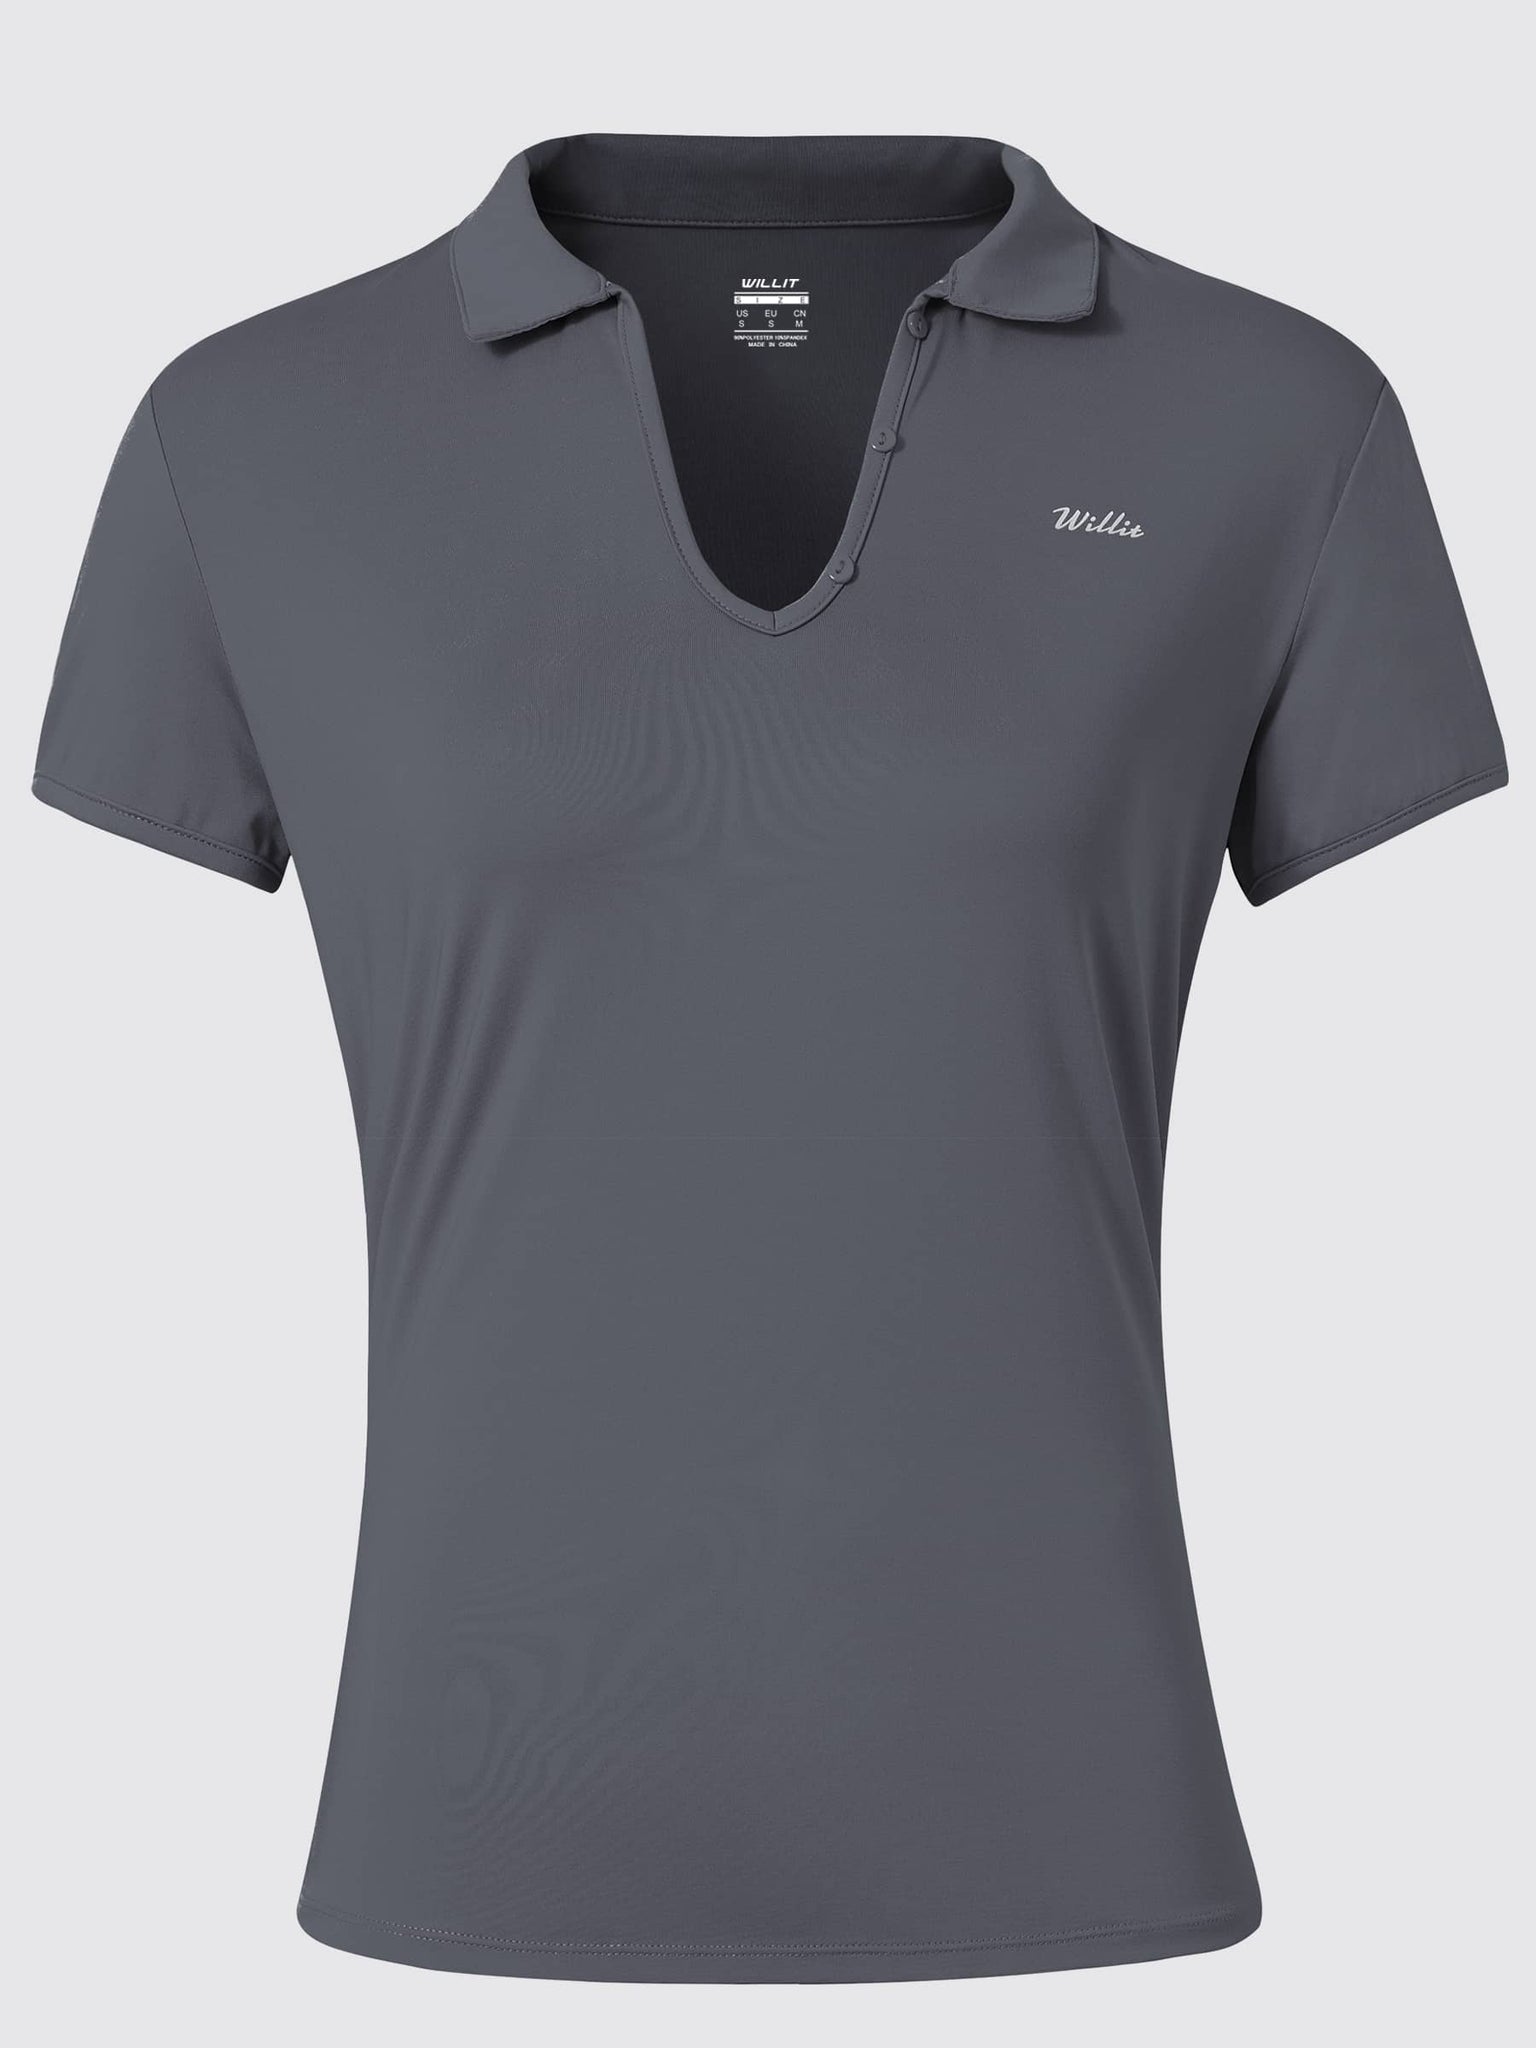 Willit Women's Golf Polo Short Sleeve Shirts_Gray1